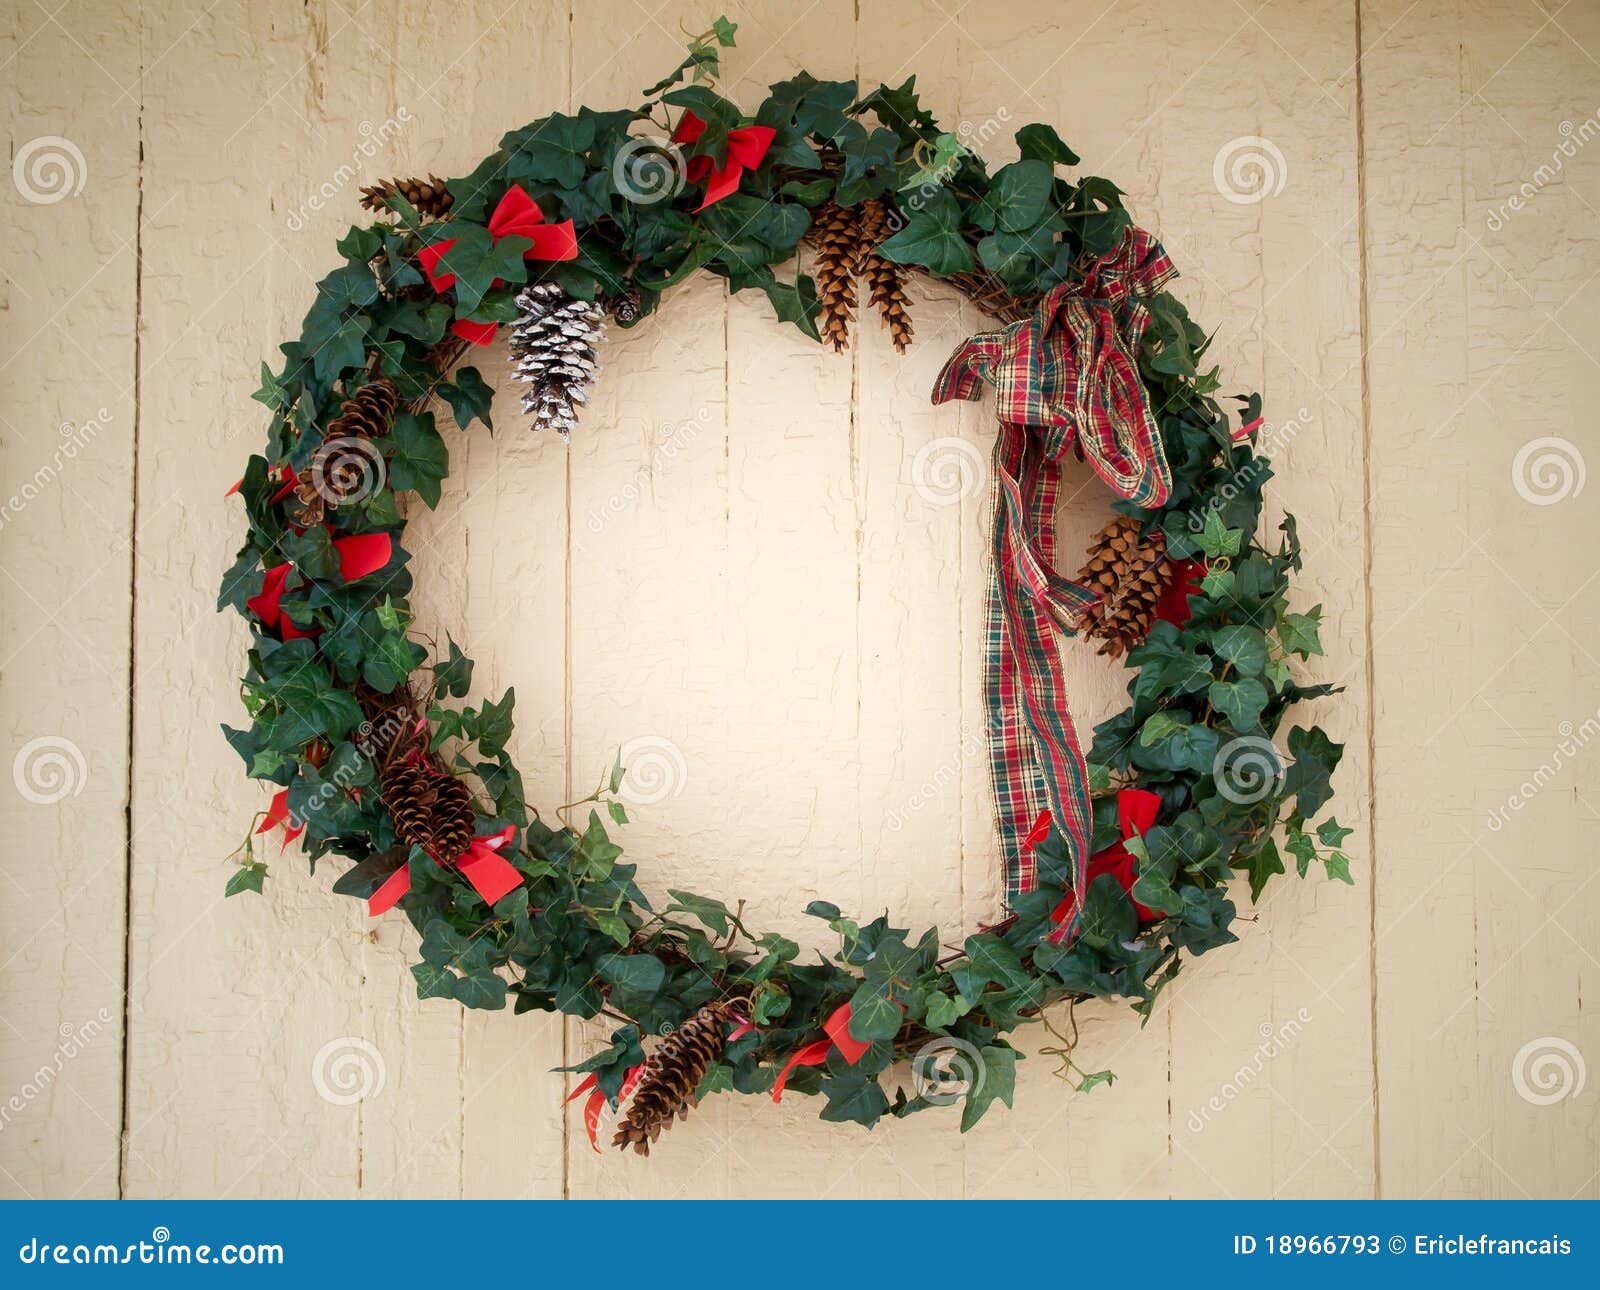 christmas ivy wreath